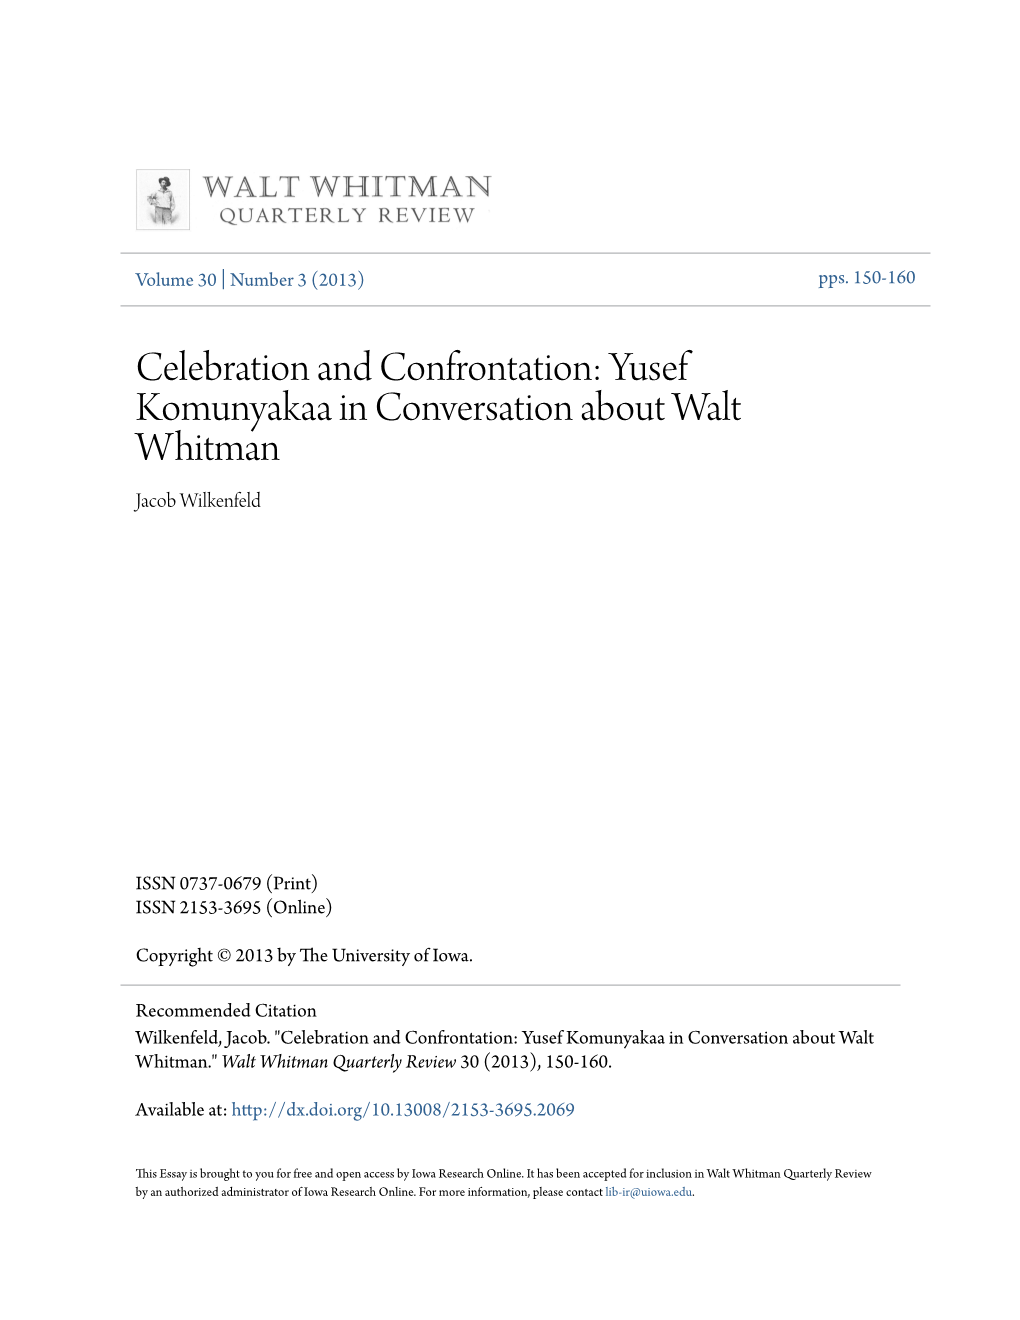 Celebration and Confrontation: Yusef Komunyakaa in Conversation About Walt Whitman Jacob Wilkenfeld